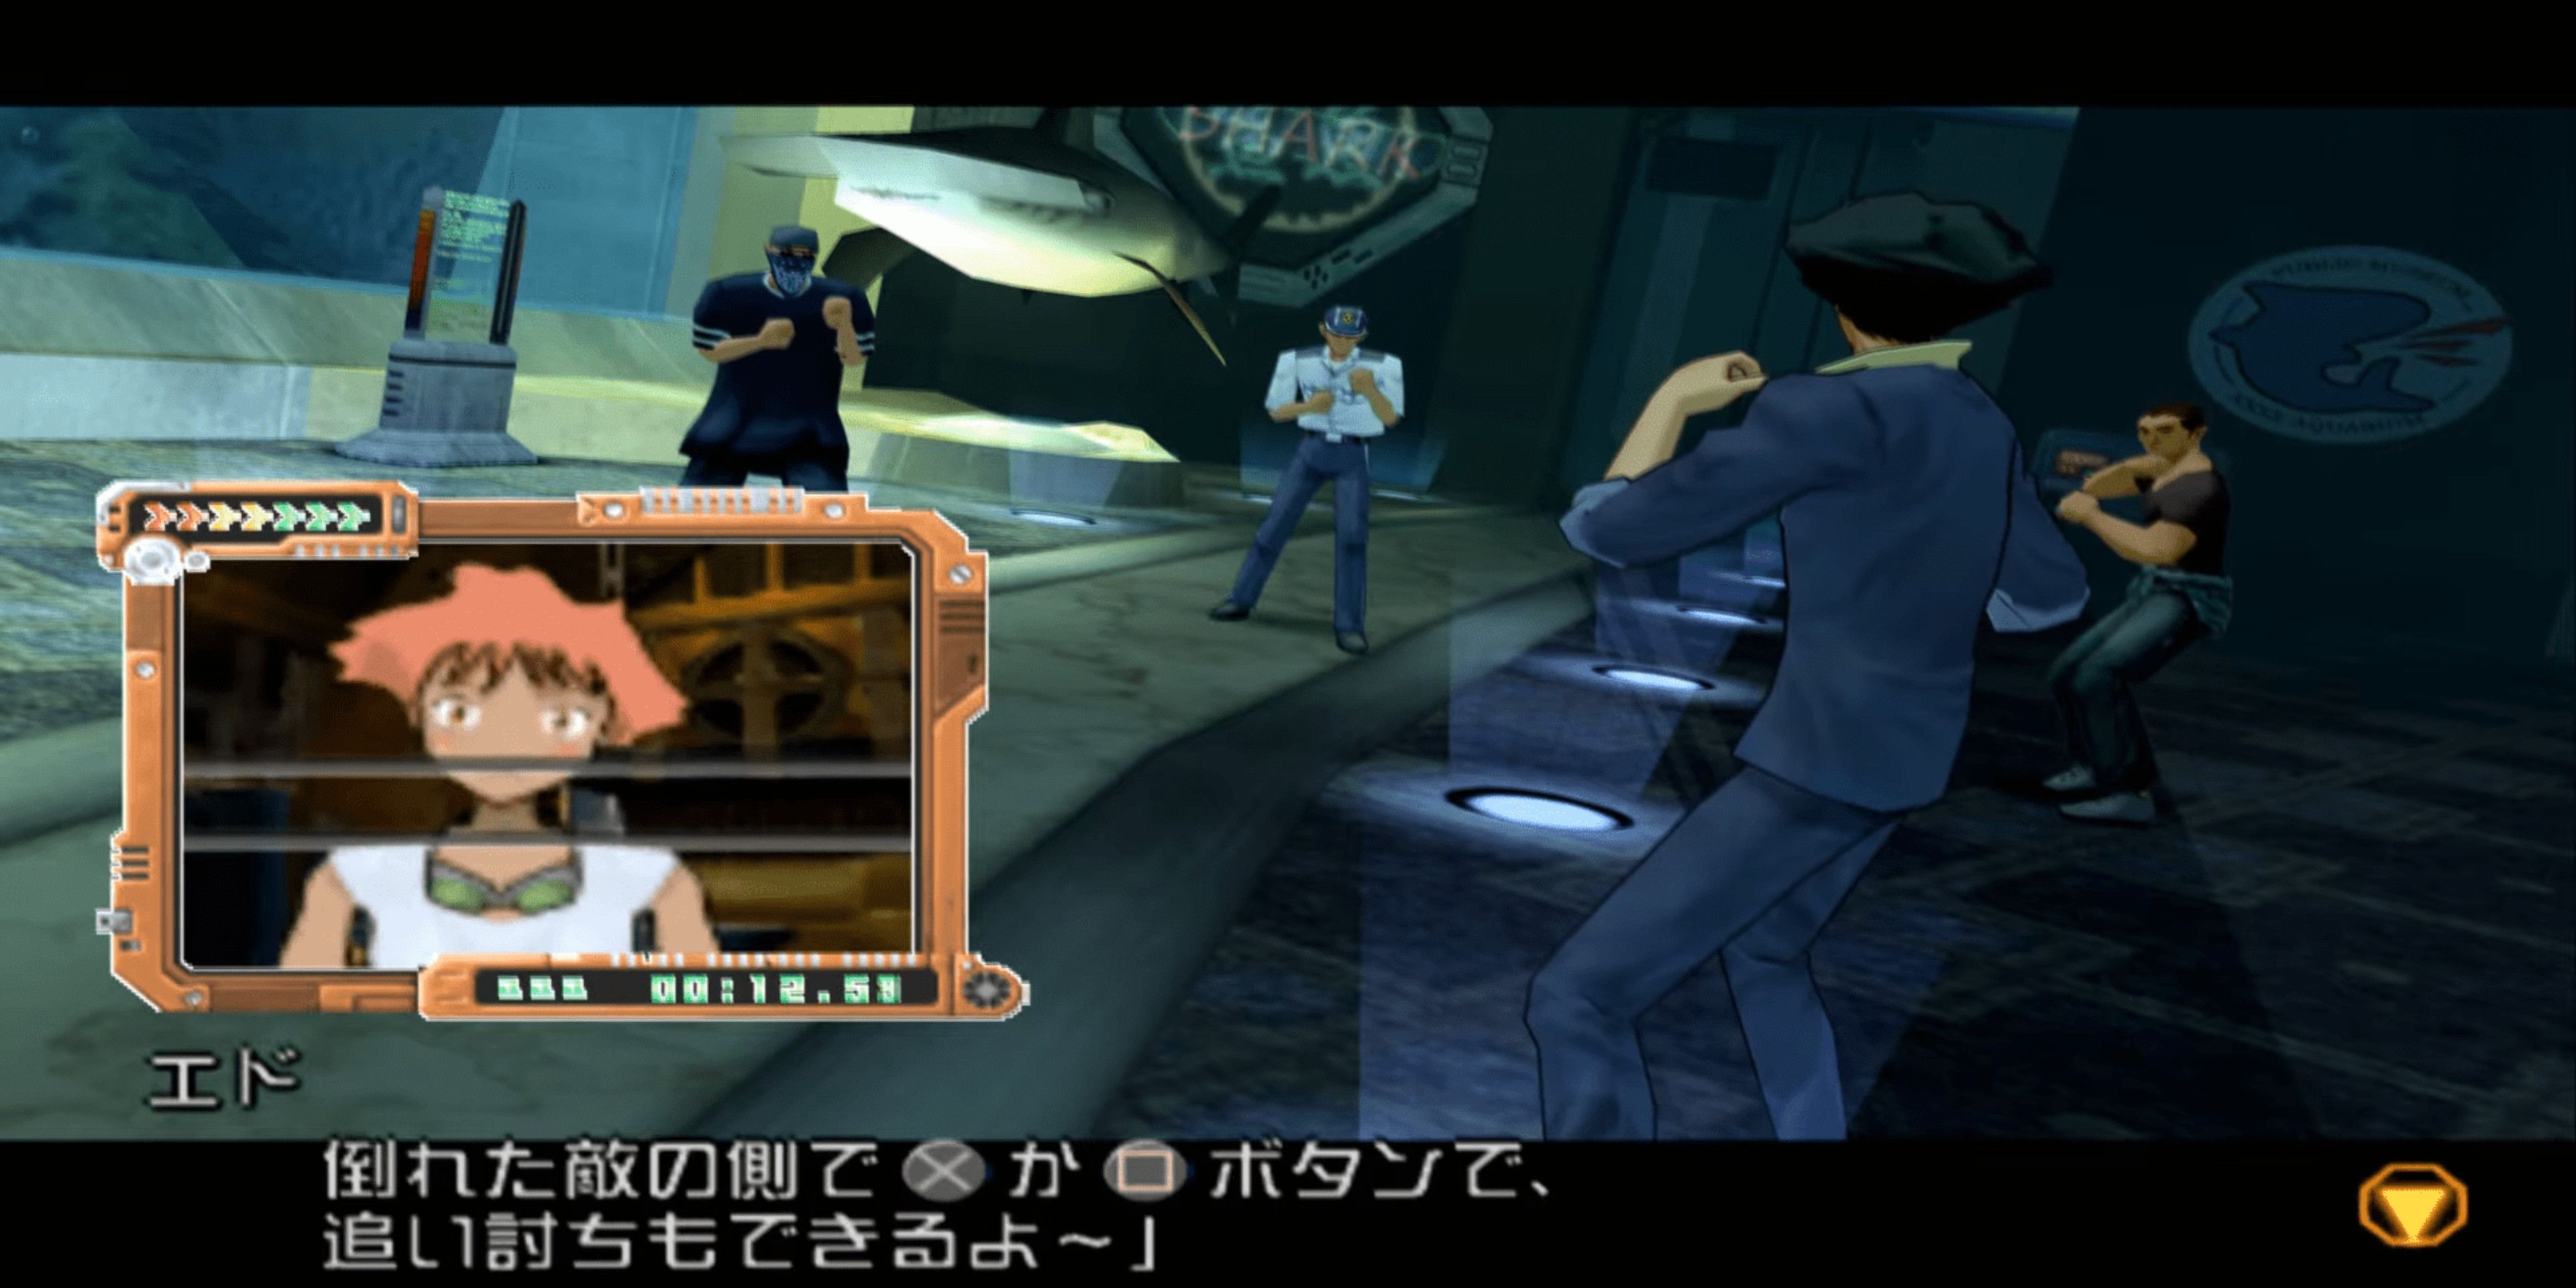 Spike fighting three enemies as Ed appears in a pop up screen